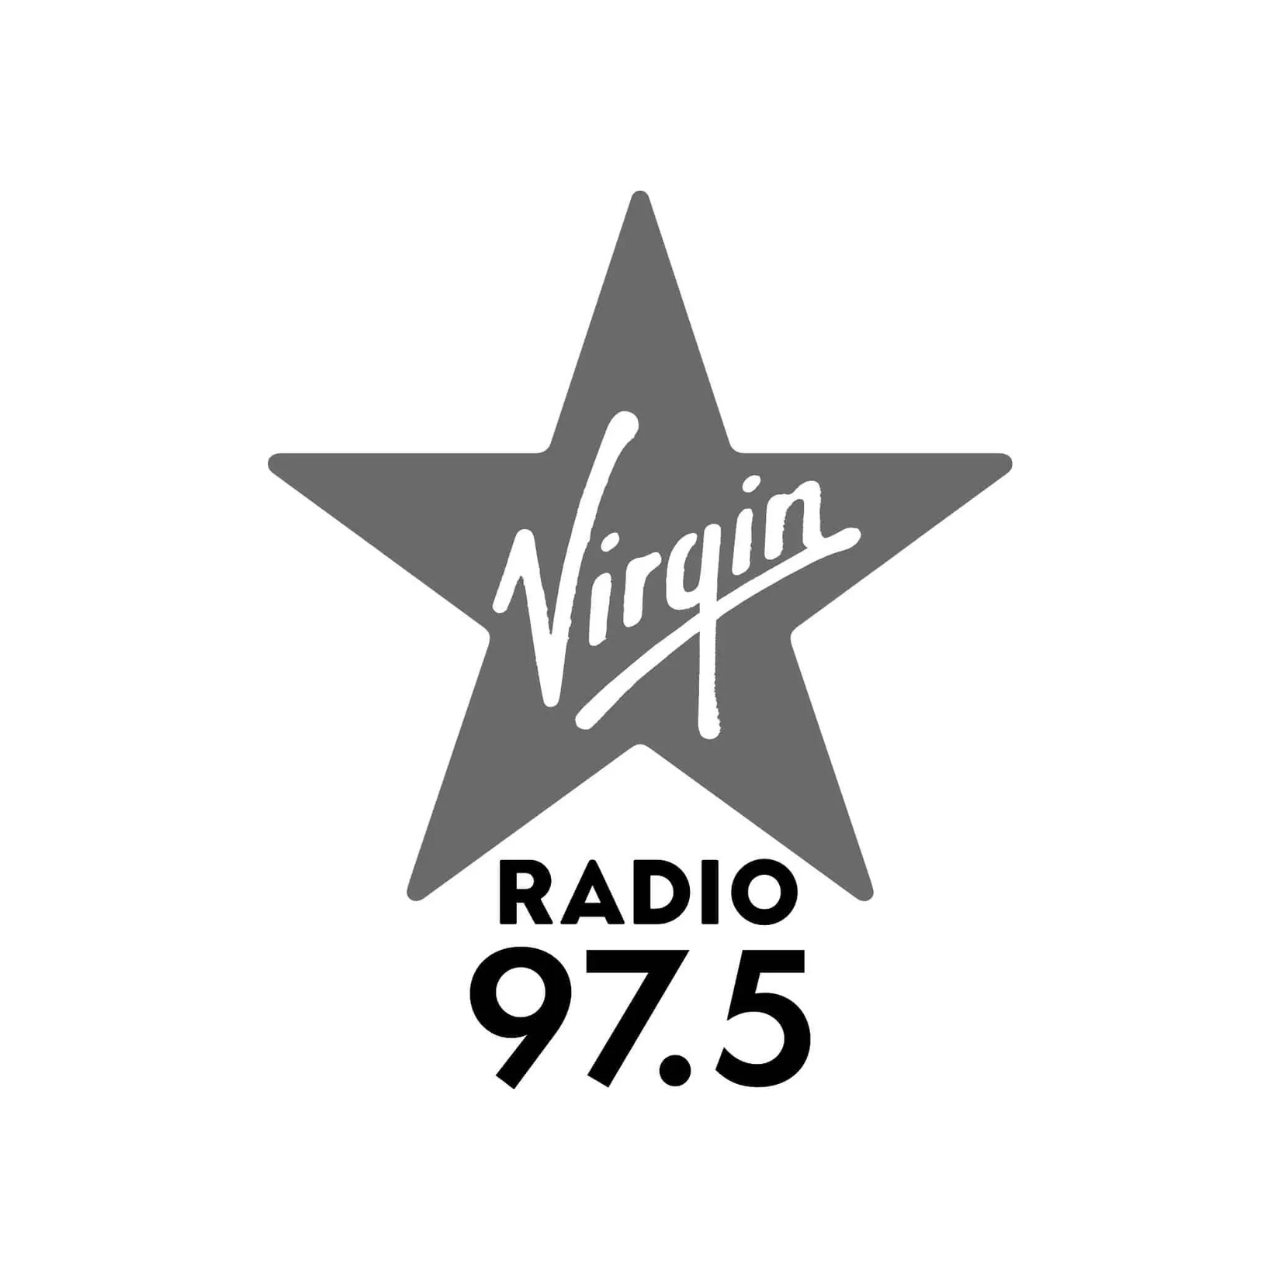 Logo Virgin radio 97.5: Massaya massage home spa client